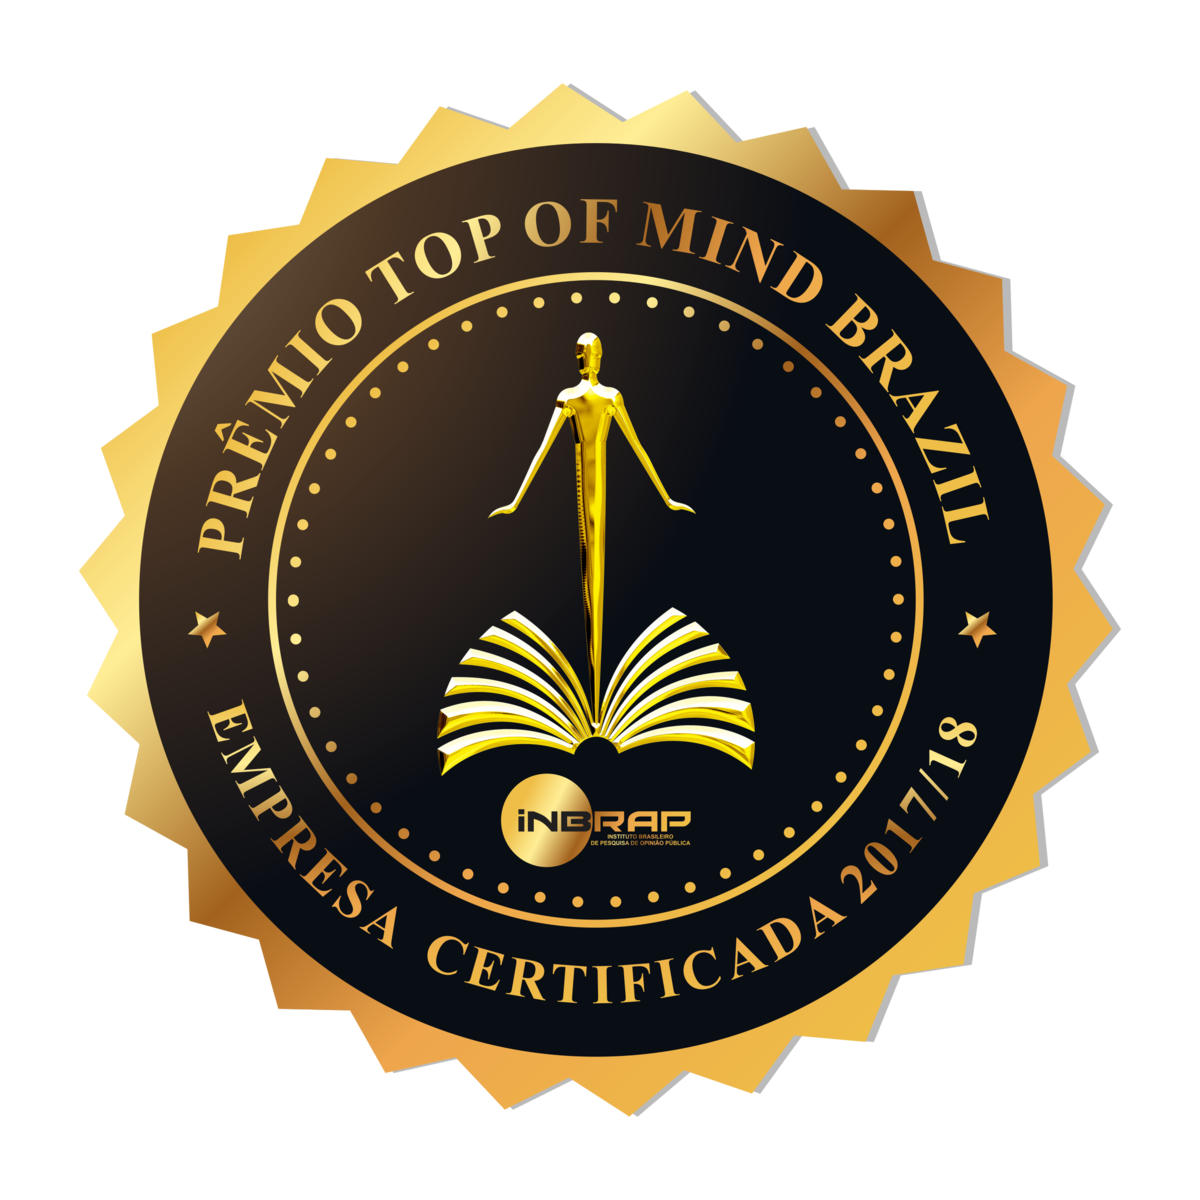 Emblema do prêmio Top Of Mind Brazil 2017/18 concedido pela INBRAP